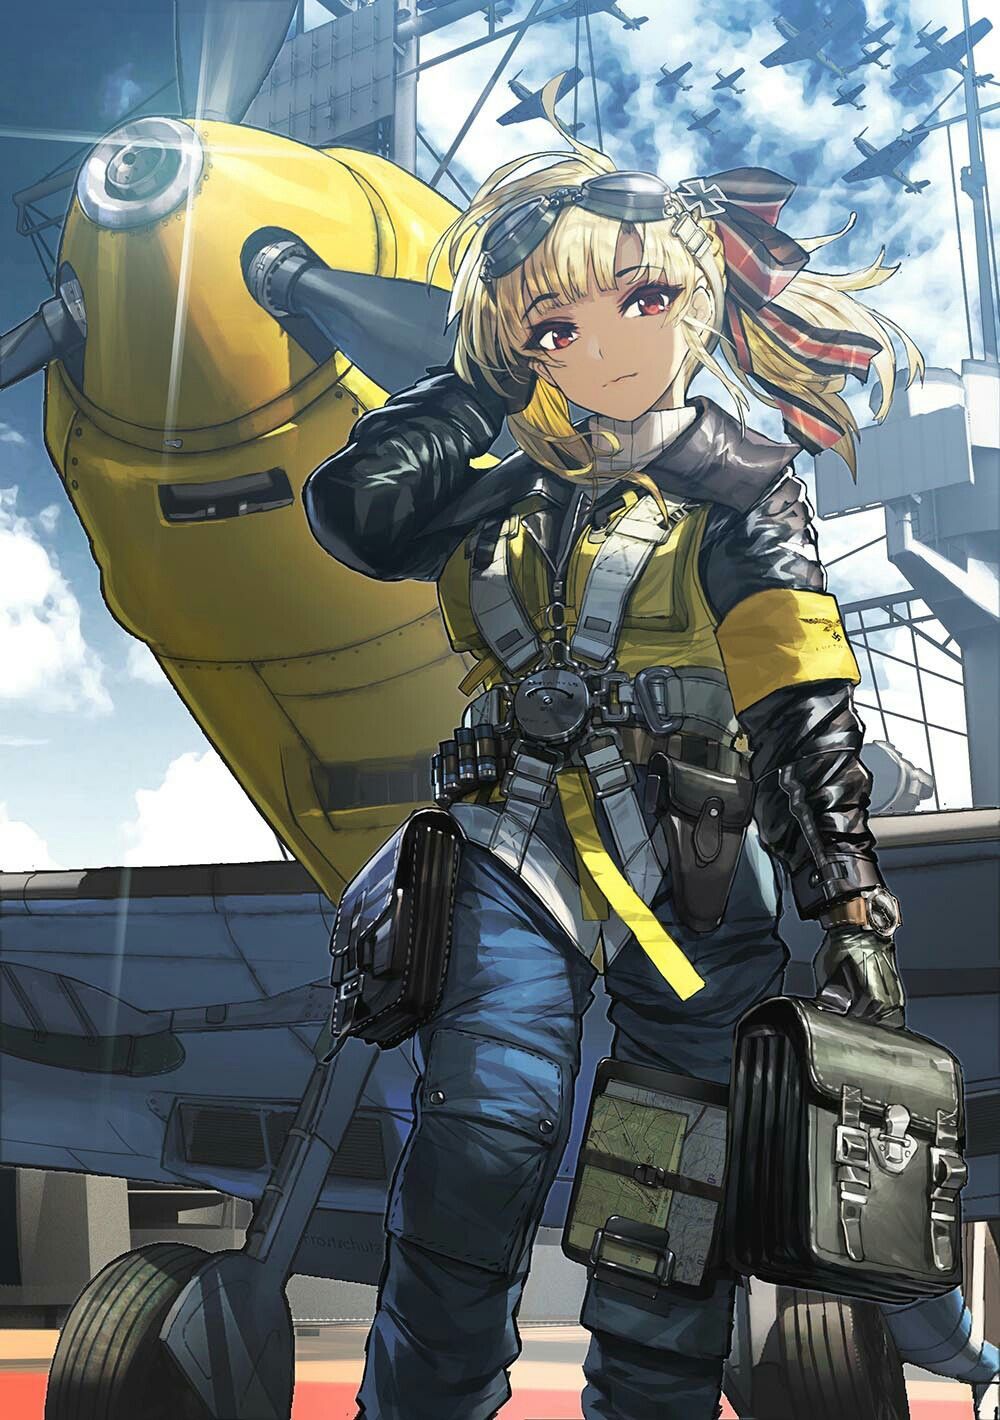 Best Army Anime Girls image. Anime military, Anime, Military